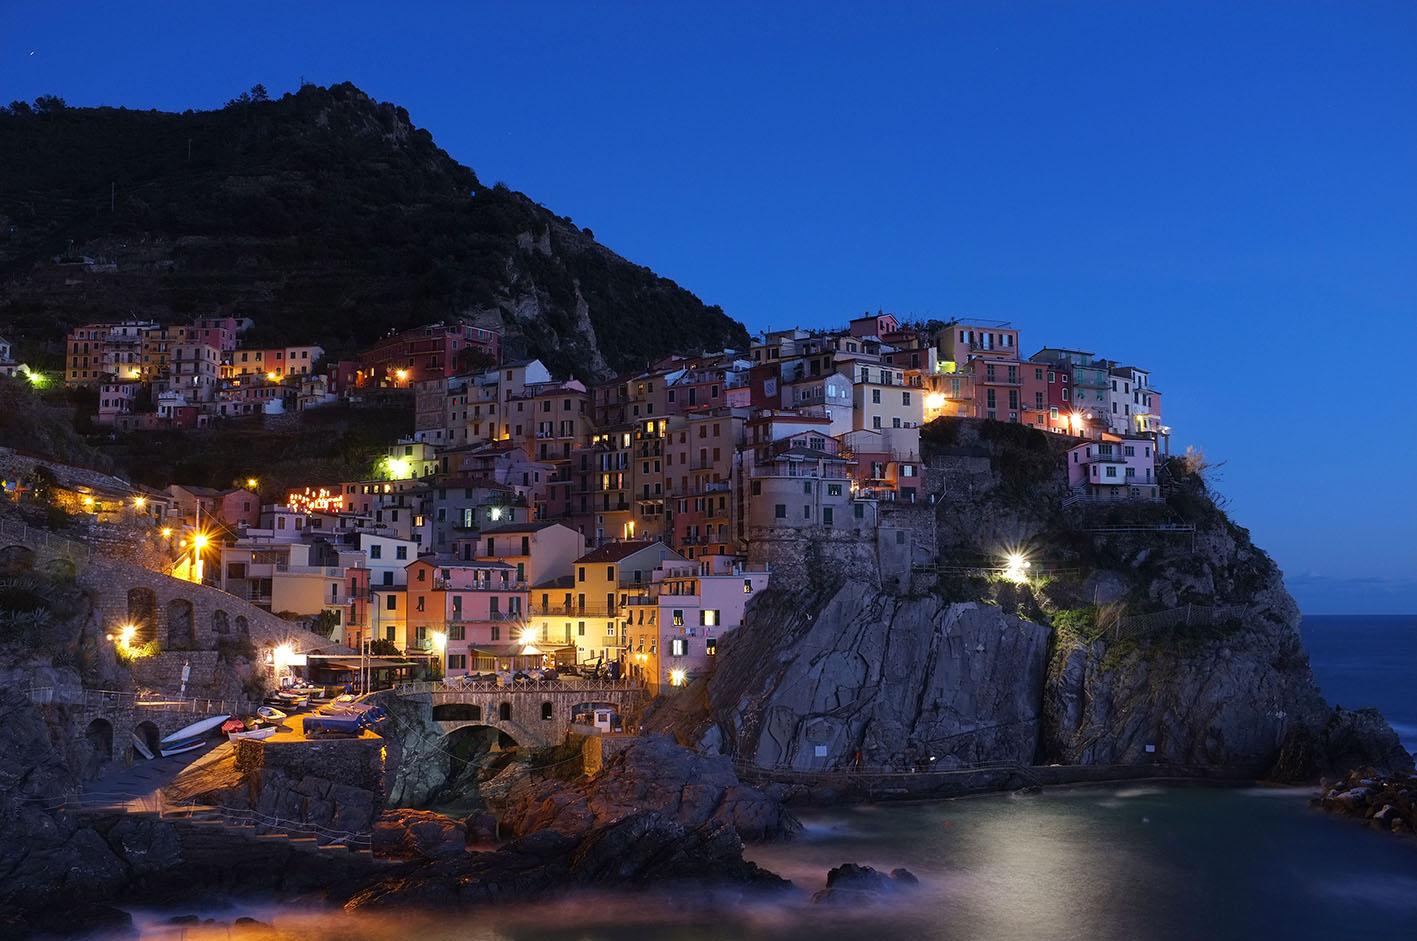 Night view of the Italian Riviera